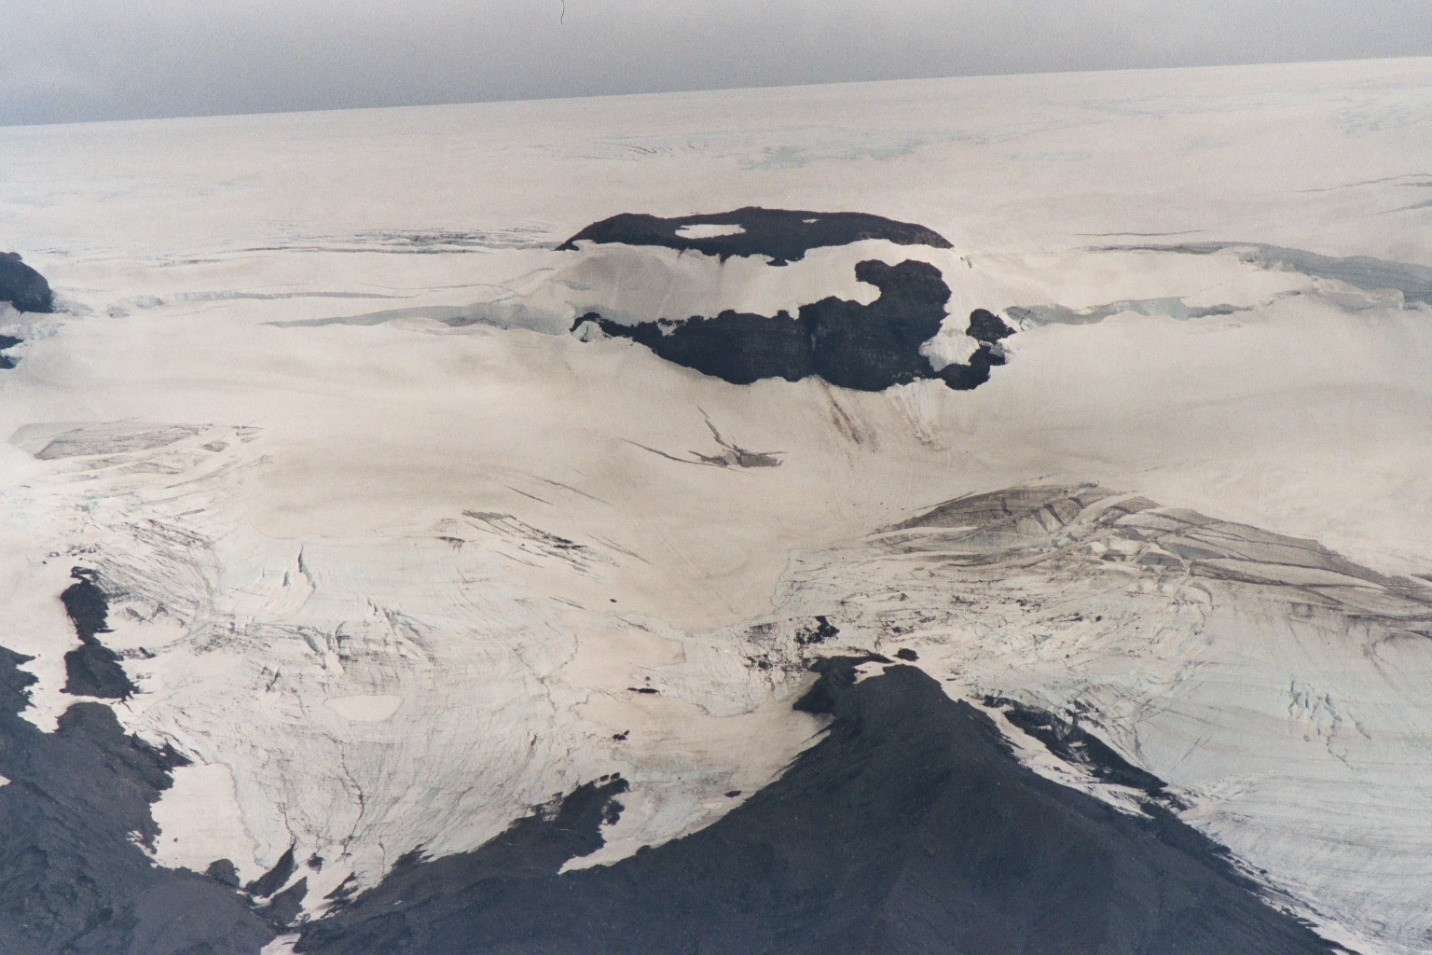 Le volcan Langjökull